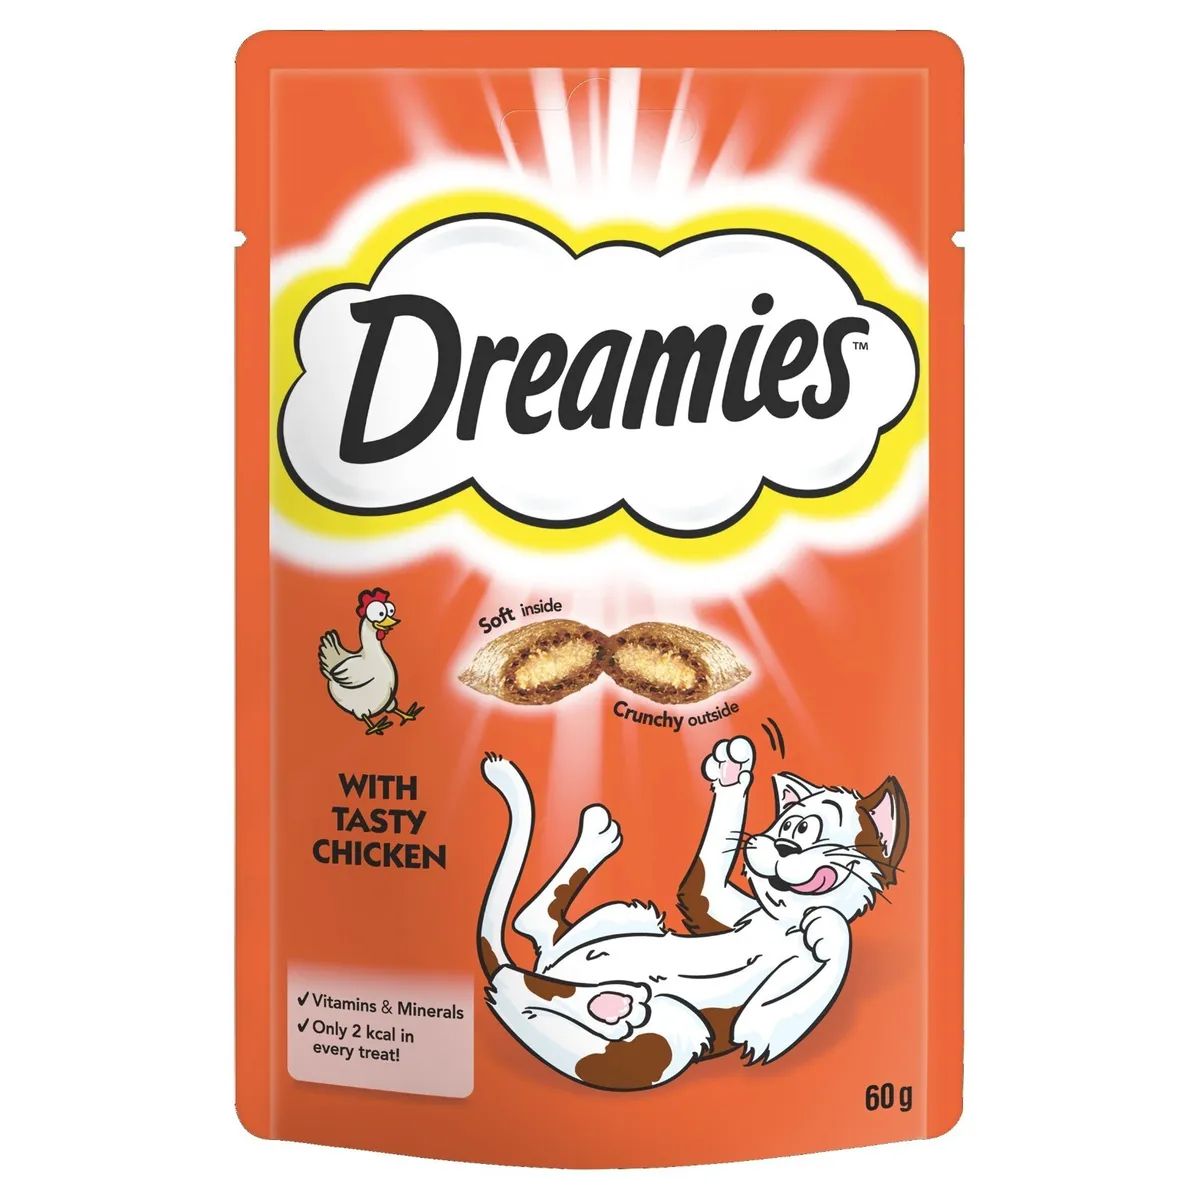 Dreamies - With Tasty Chicken - 60g cat biscuits.